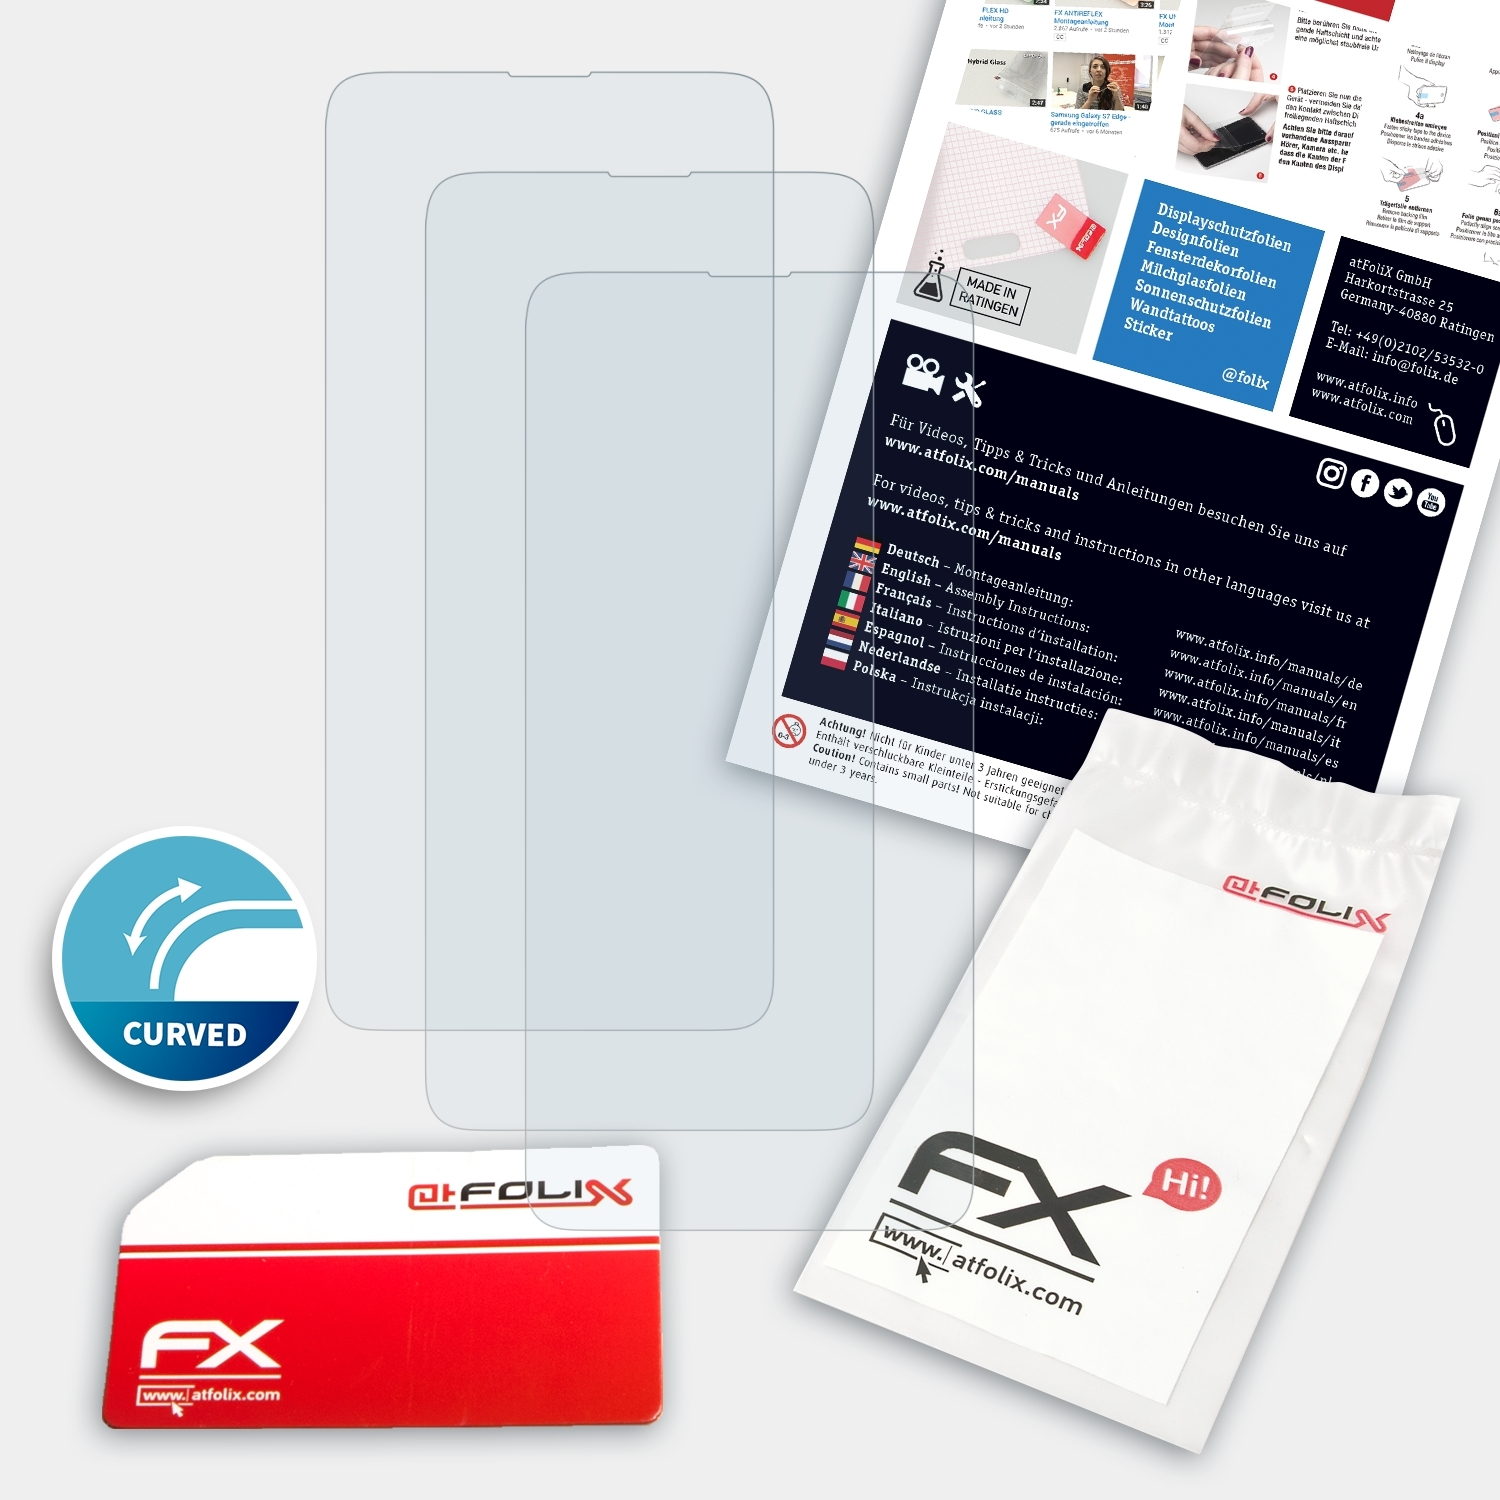 ATFOLIX 3x FX-ActiFleX Displayschutz(für Xiaomi Redmi K20 Pro)